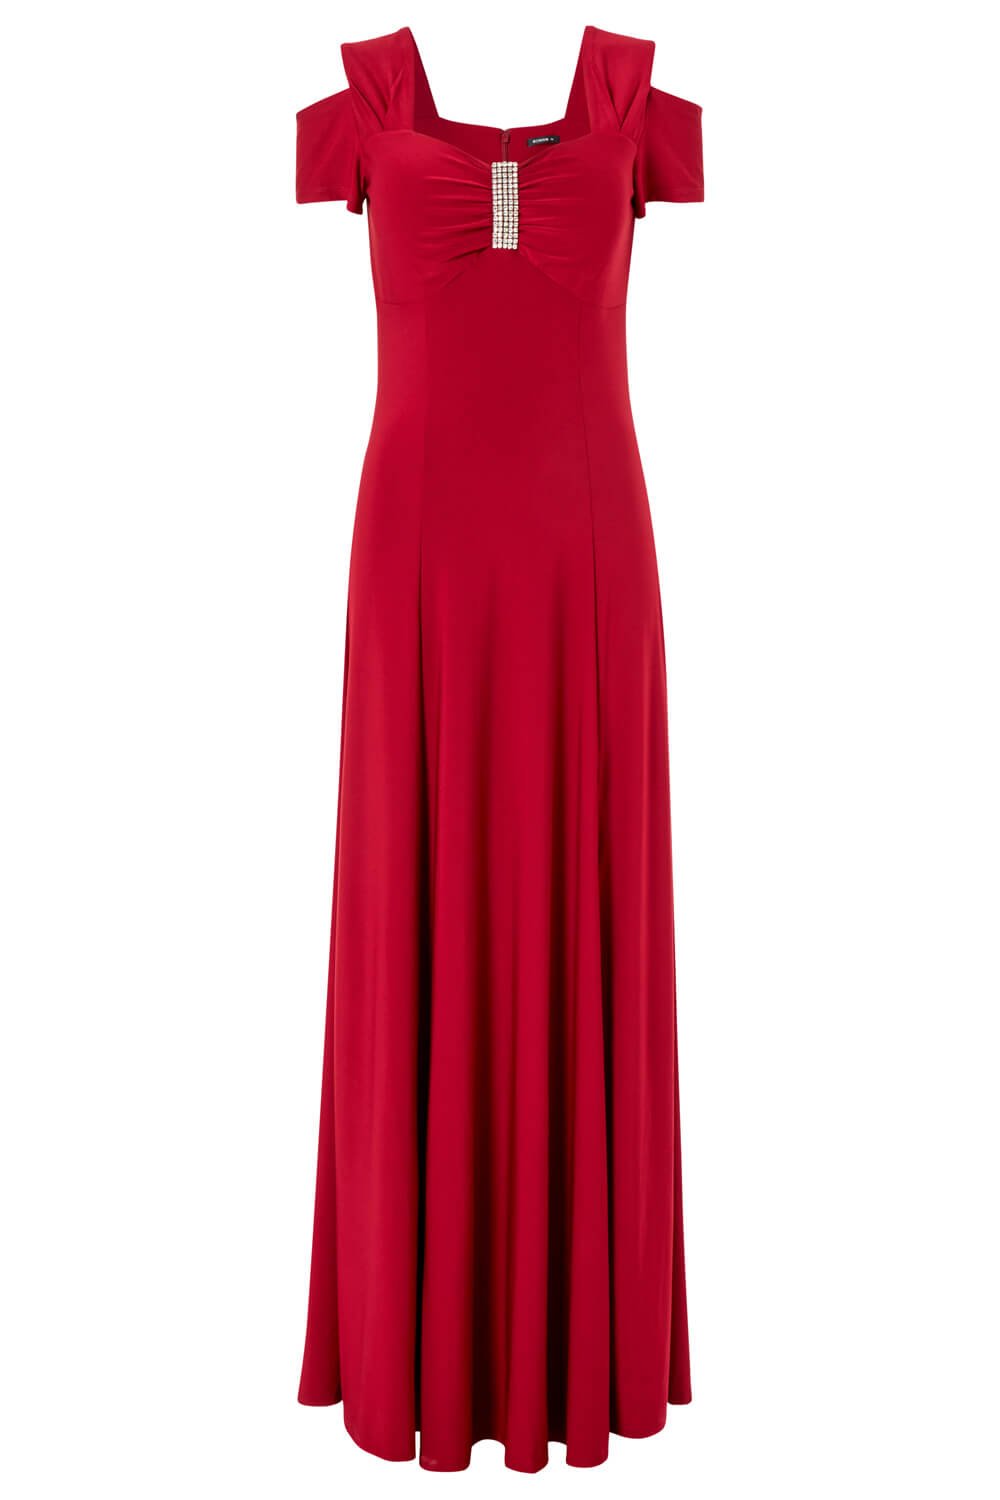 Diamante Cold Shoulder Maxi Dress in Red Silver - Roman Originals UK